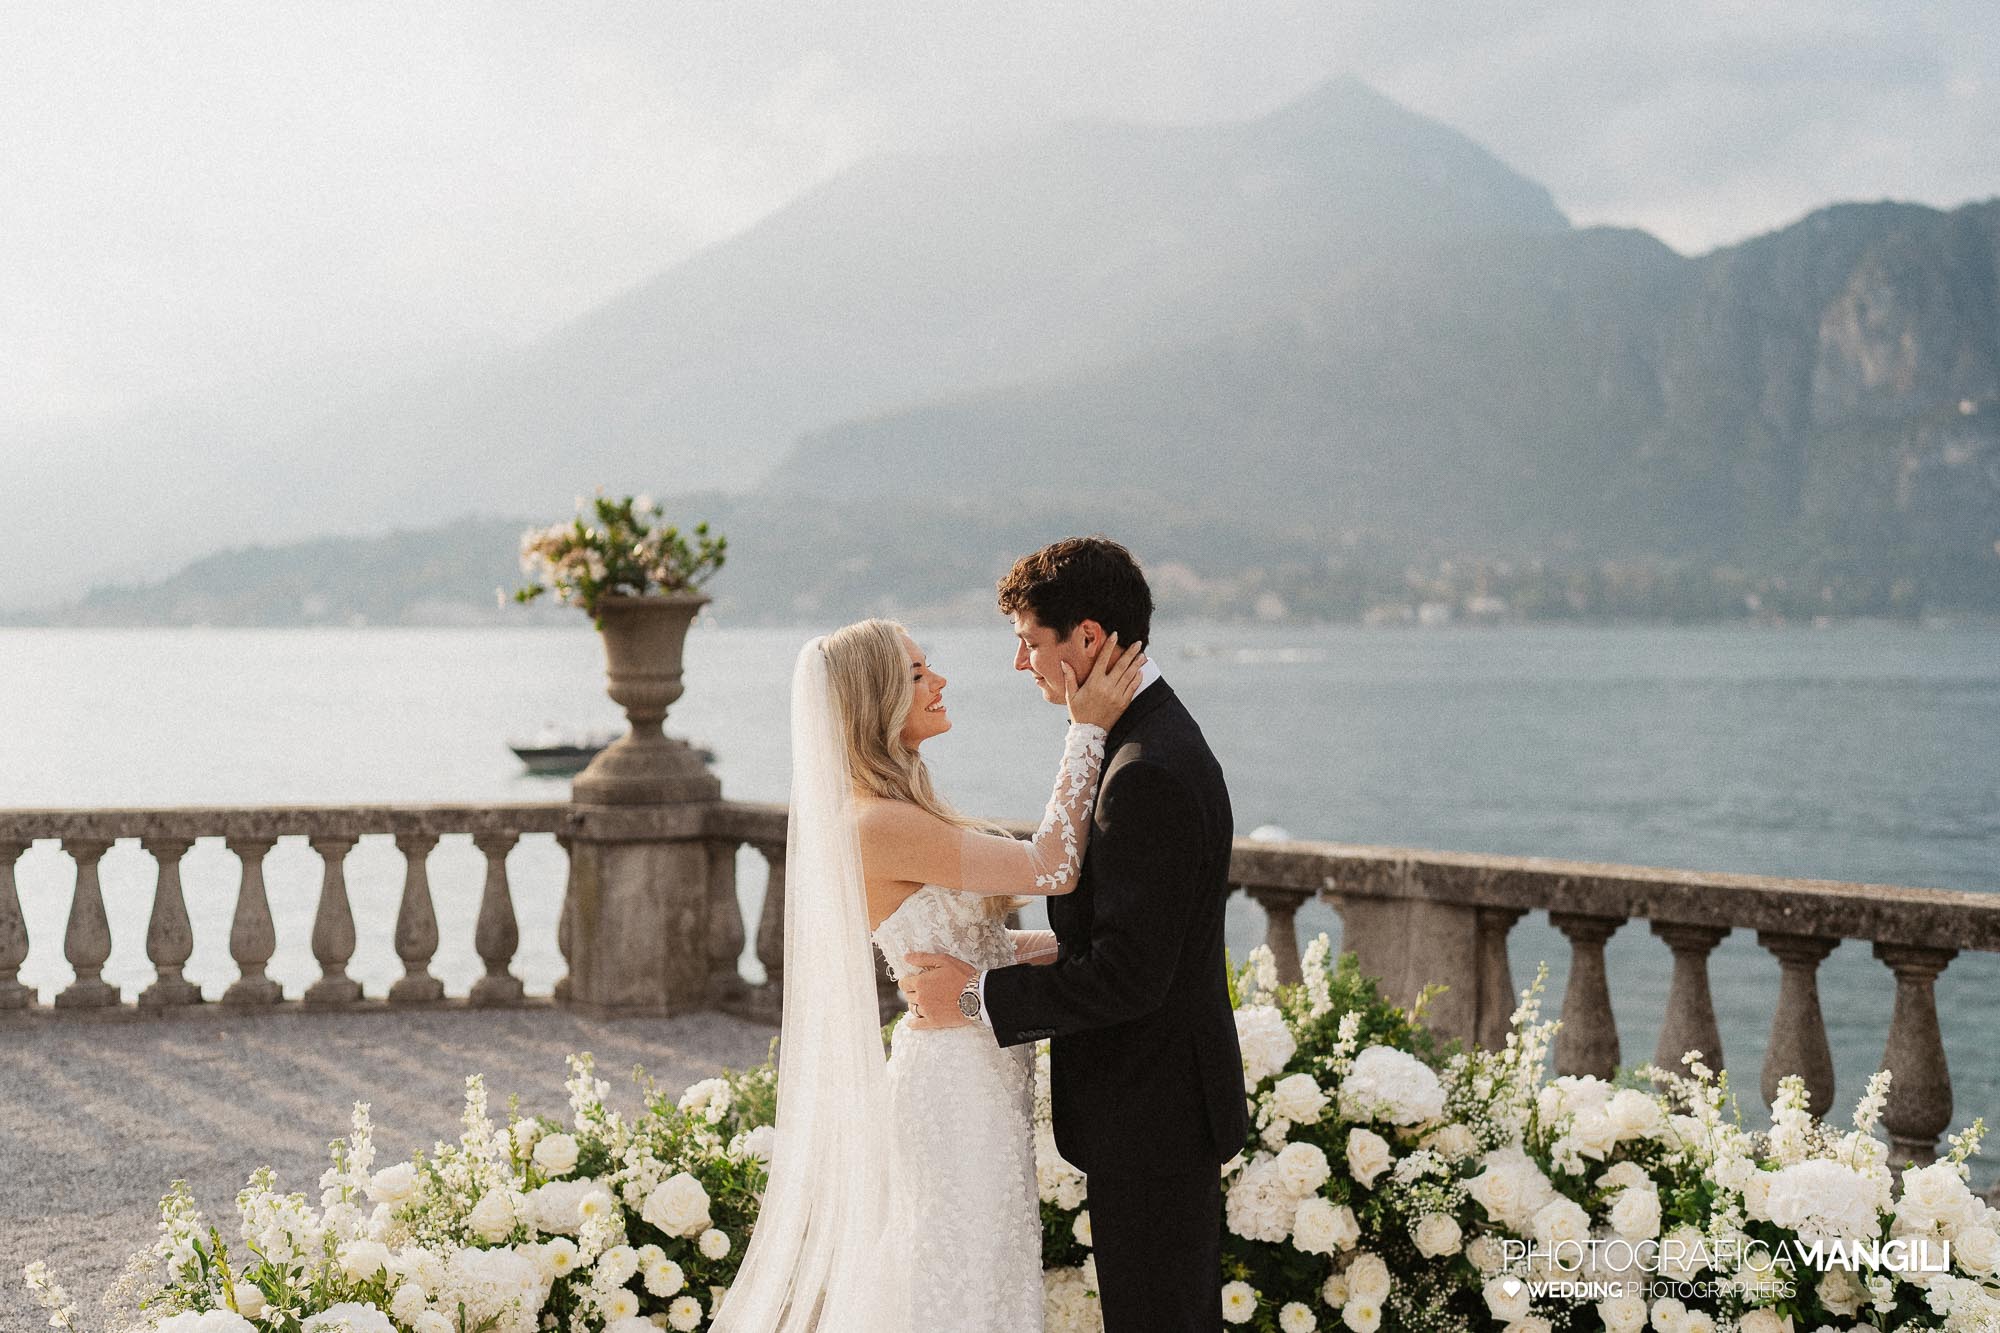 wedding photo villa serbelloni bellagio como lake london dylan 072